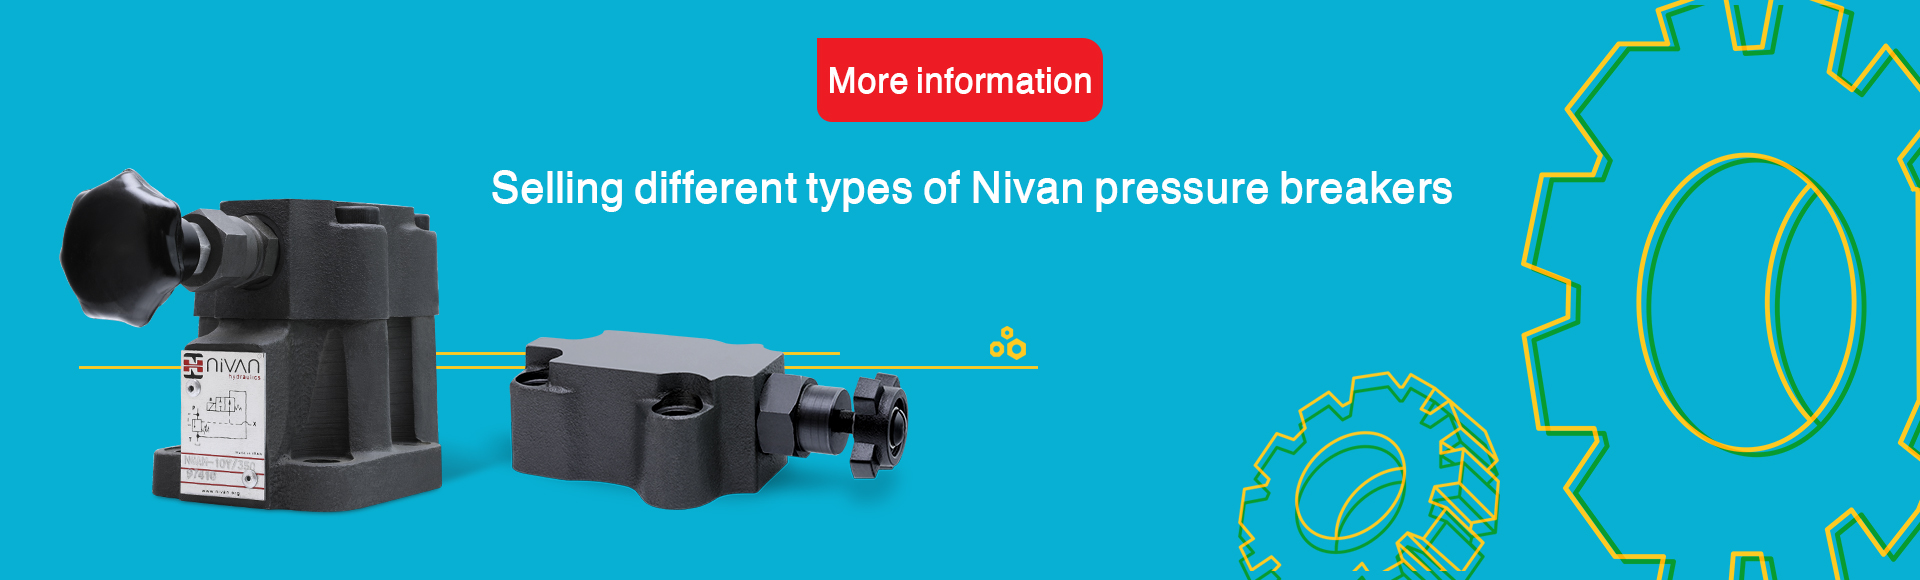 Nivan pressure breaker, Nivan block electric pressure breaker, Nivan manual pressure breaker, Nivan electric manual pressure breaker, Nivan radiosync, Nivan hydraulic